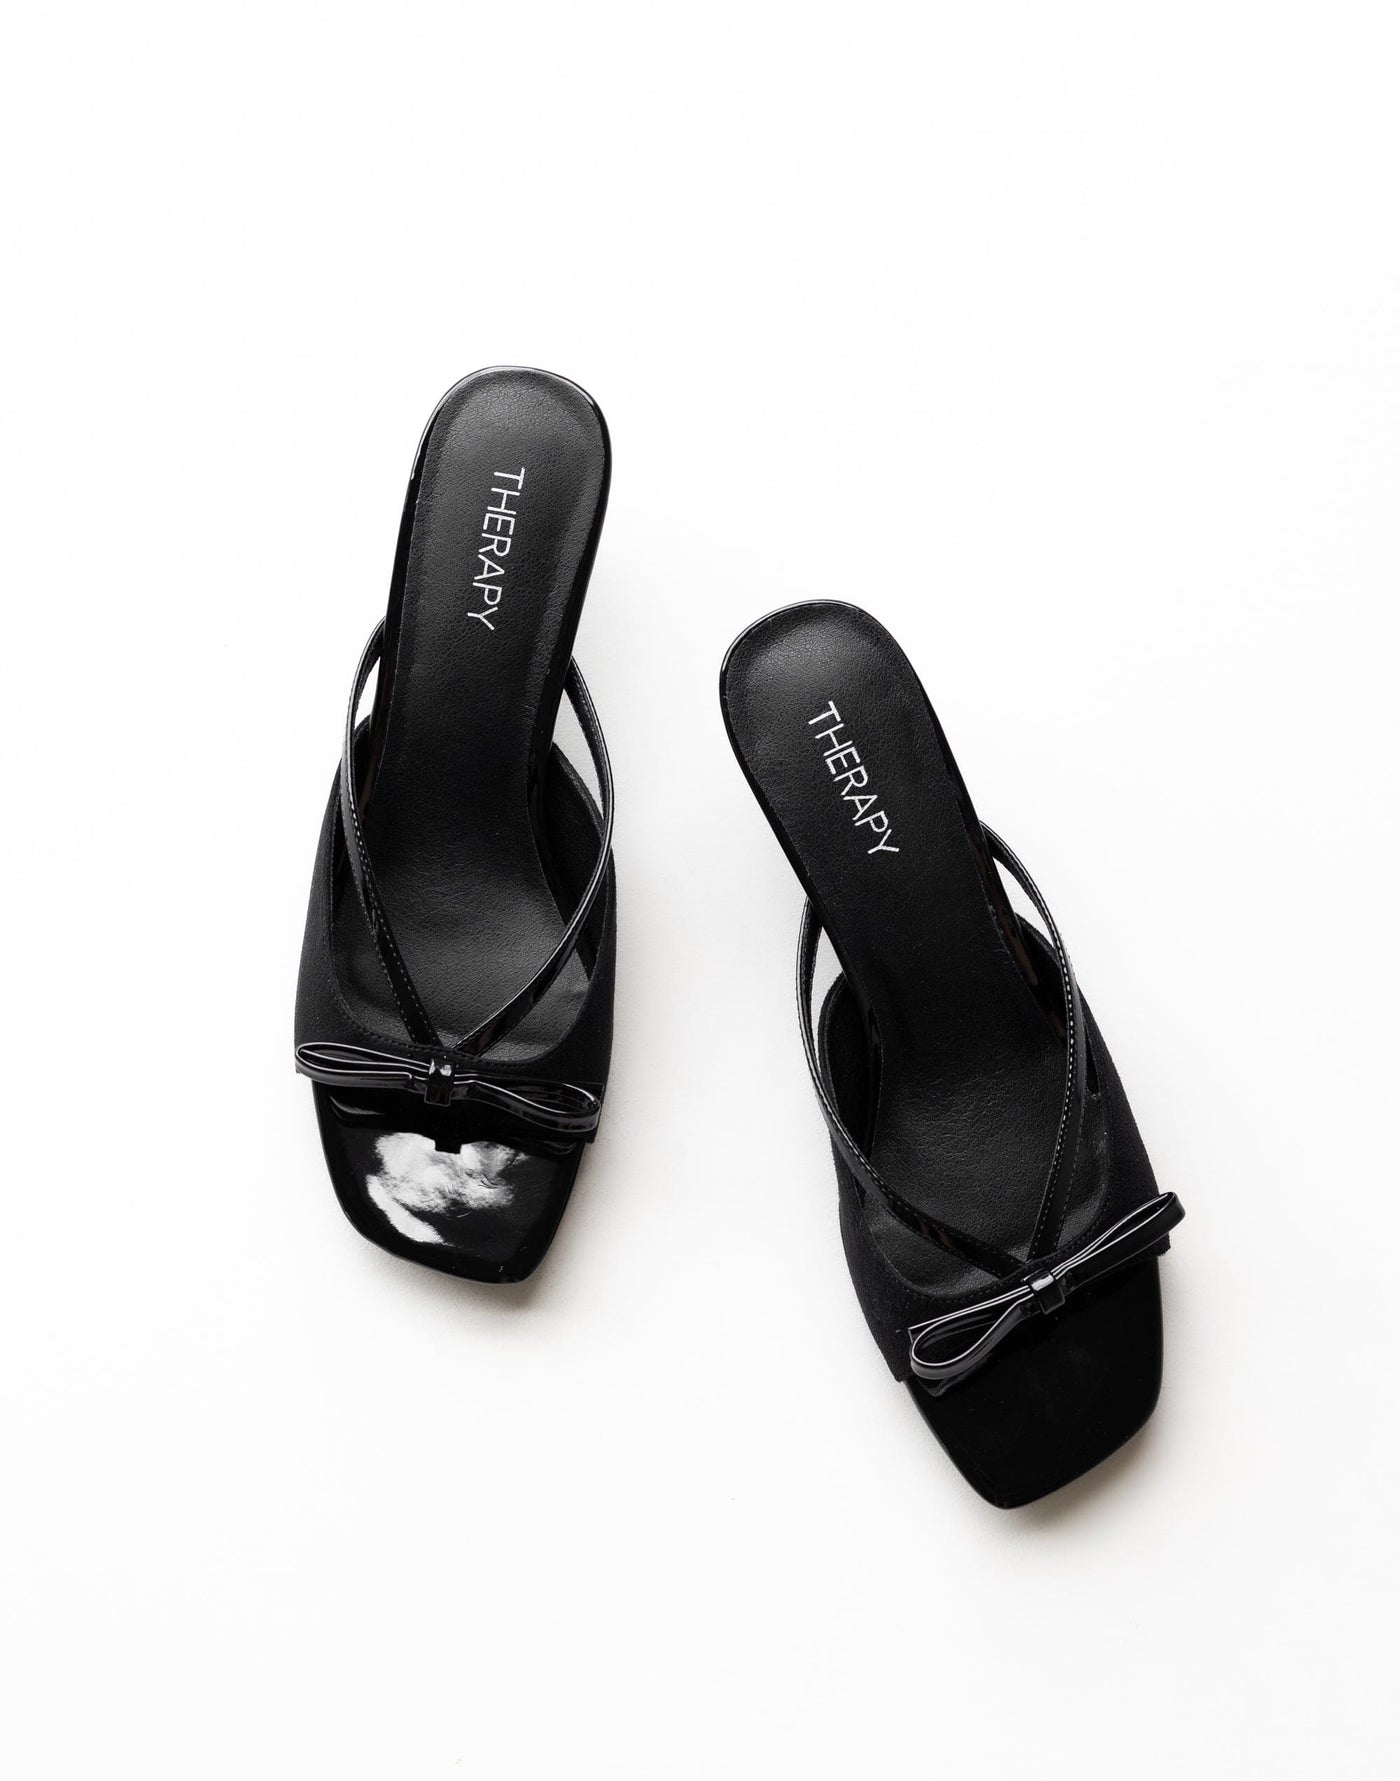 Lulu Heel (Black Microsuede) - By Therapy - Kitten Open Toe Bow Detail Heel - Women's Shoes - Charcoal Clothing